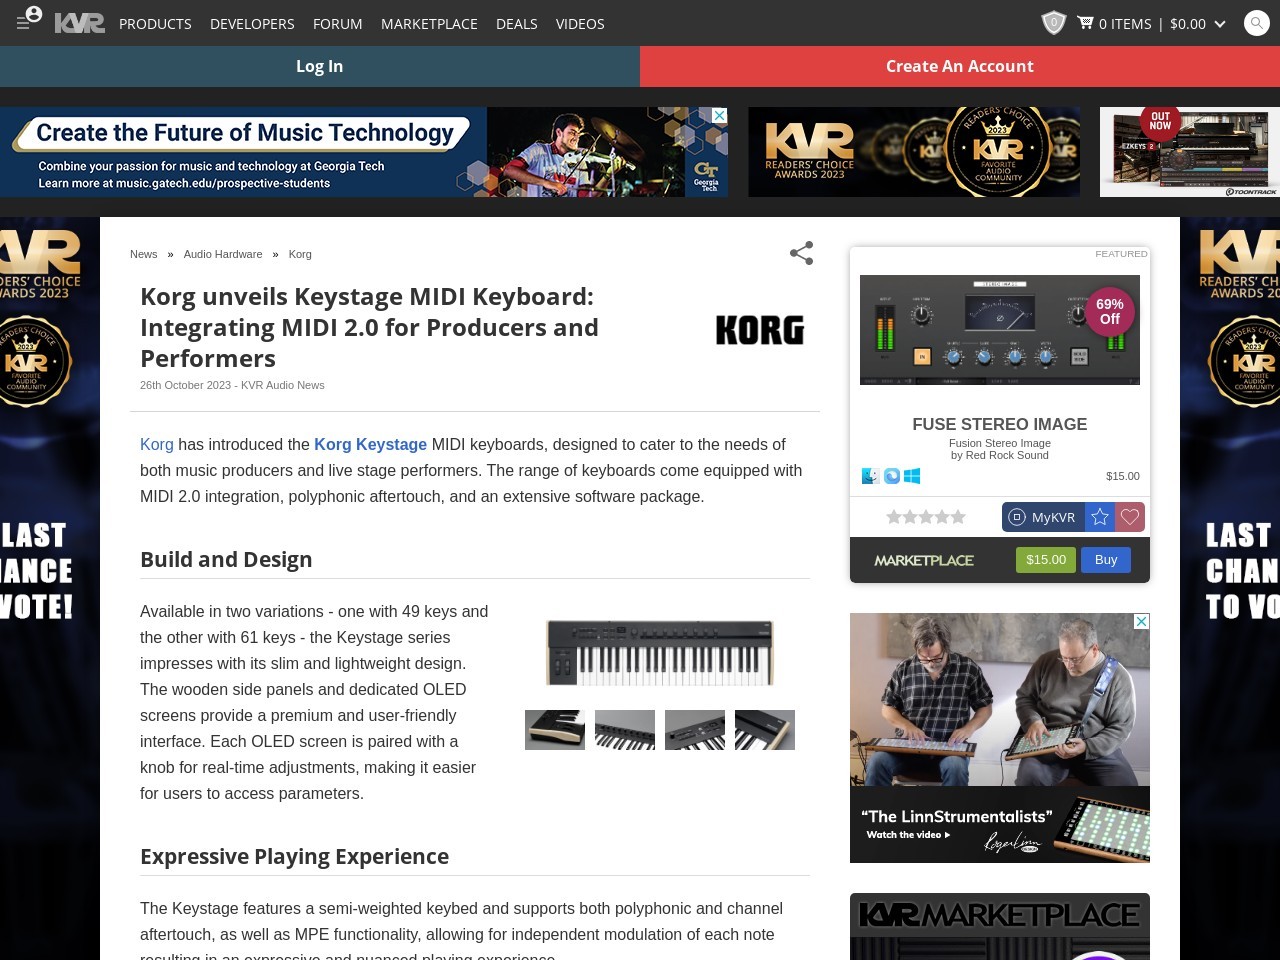 Korg unveils Keystage MIDI Keyboard: Integrating MIDI 2.0 for Producers and Performers